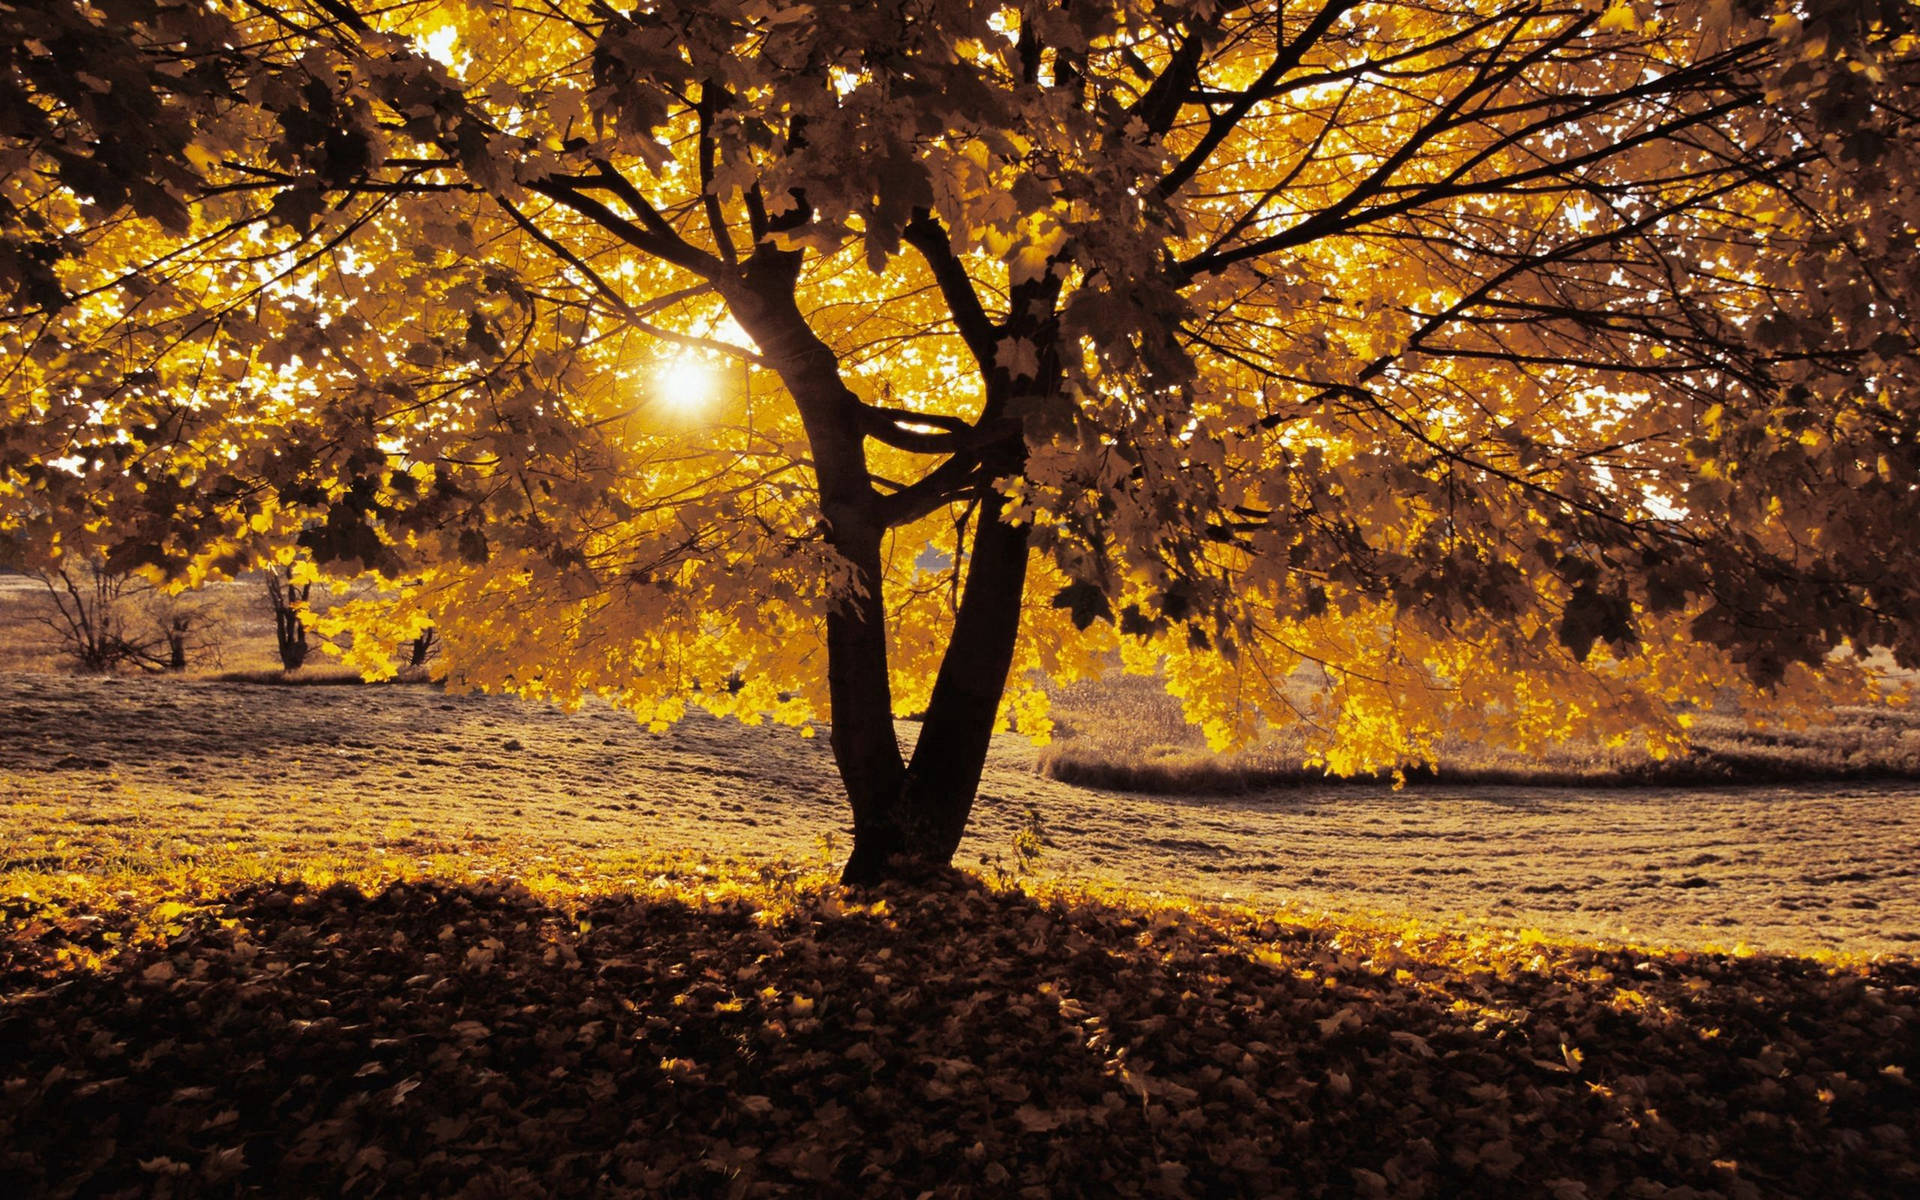 Enjoying Autumn warmth at the golden tree Wallpaper